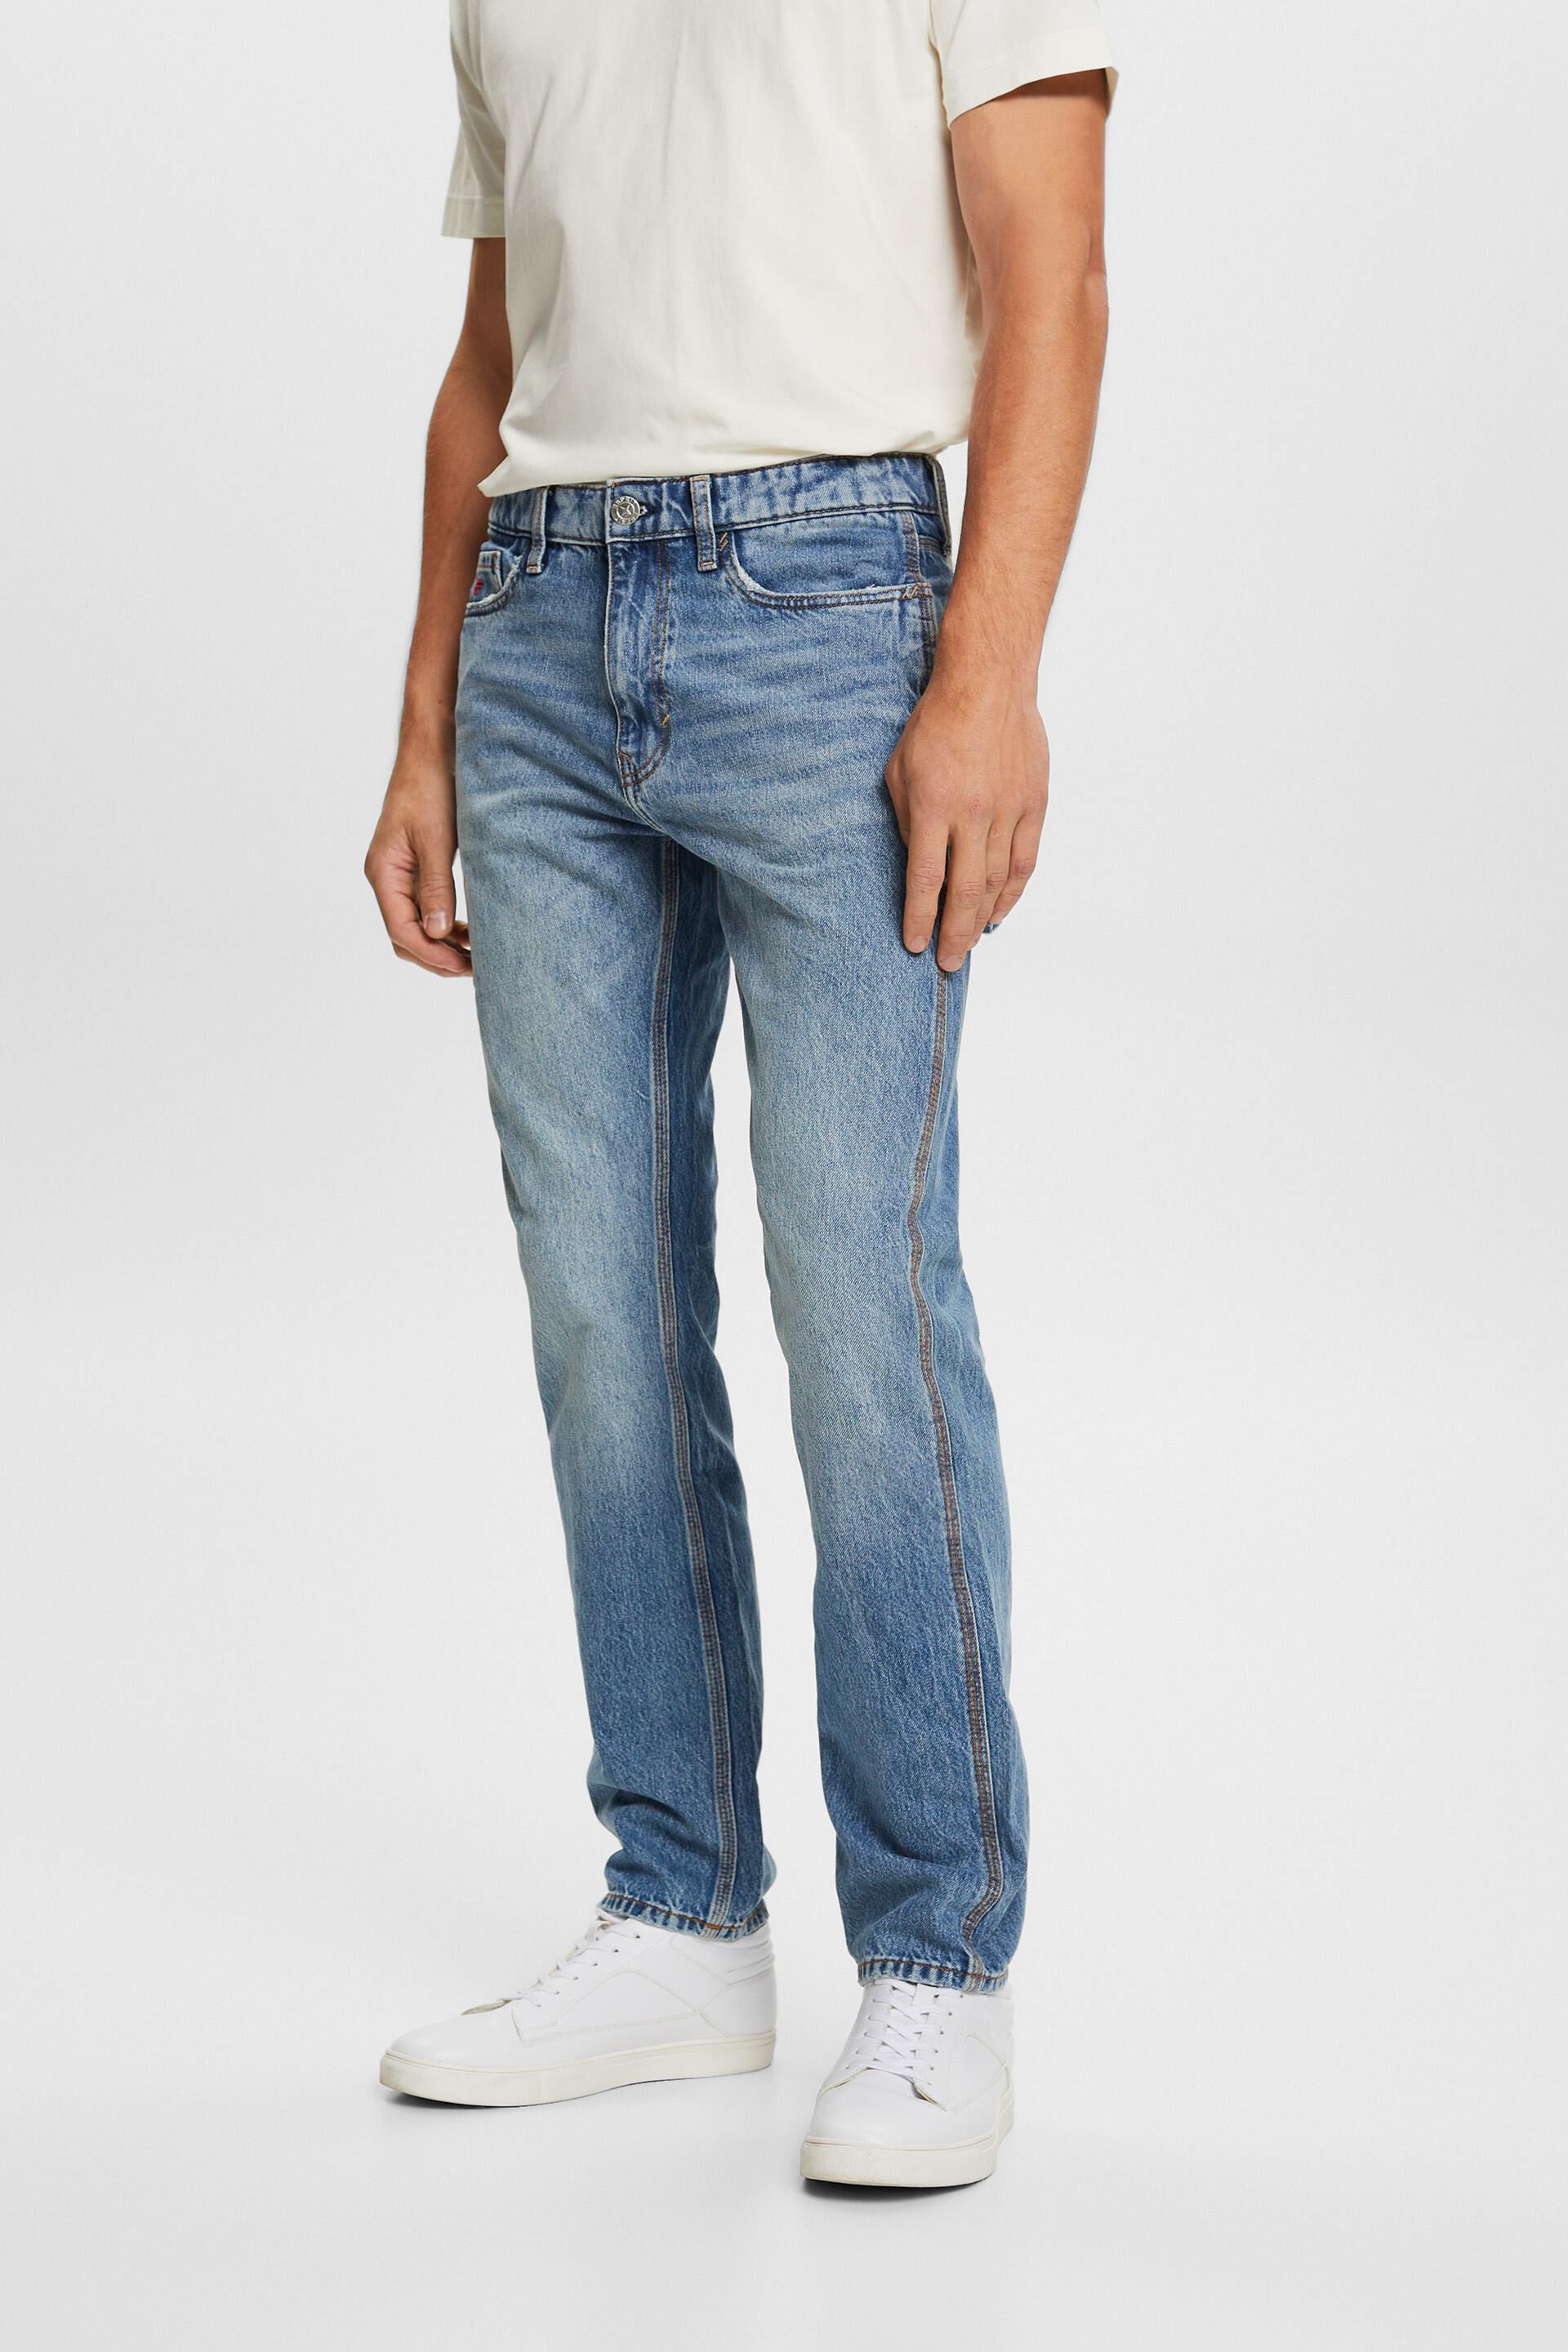 Esprit Bikini Carpenter straight fit jeans, 100% cotton